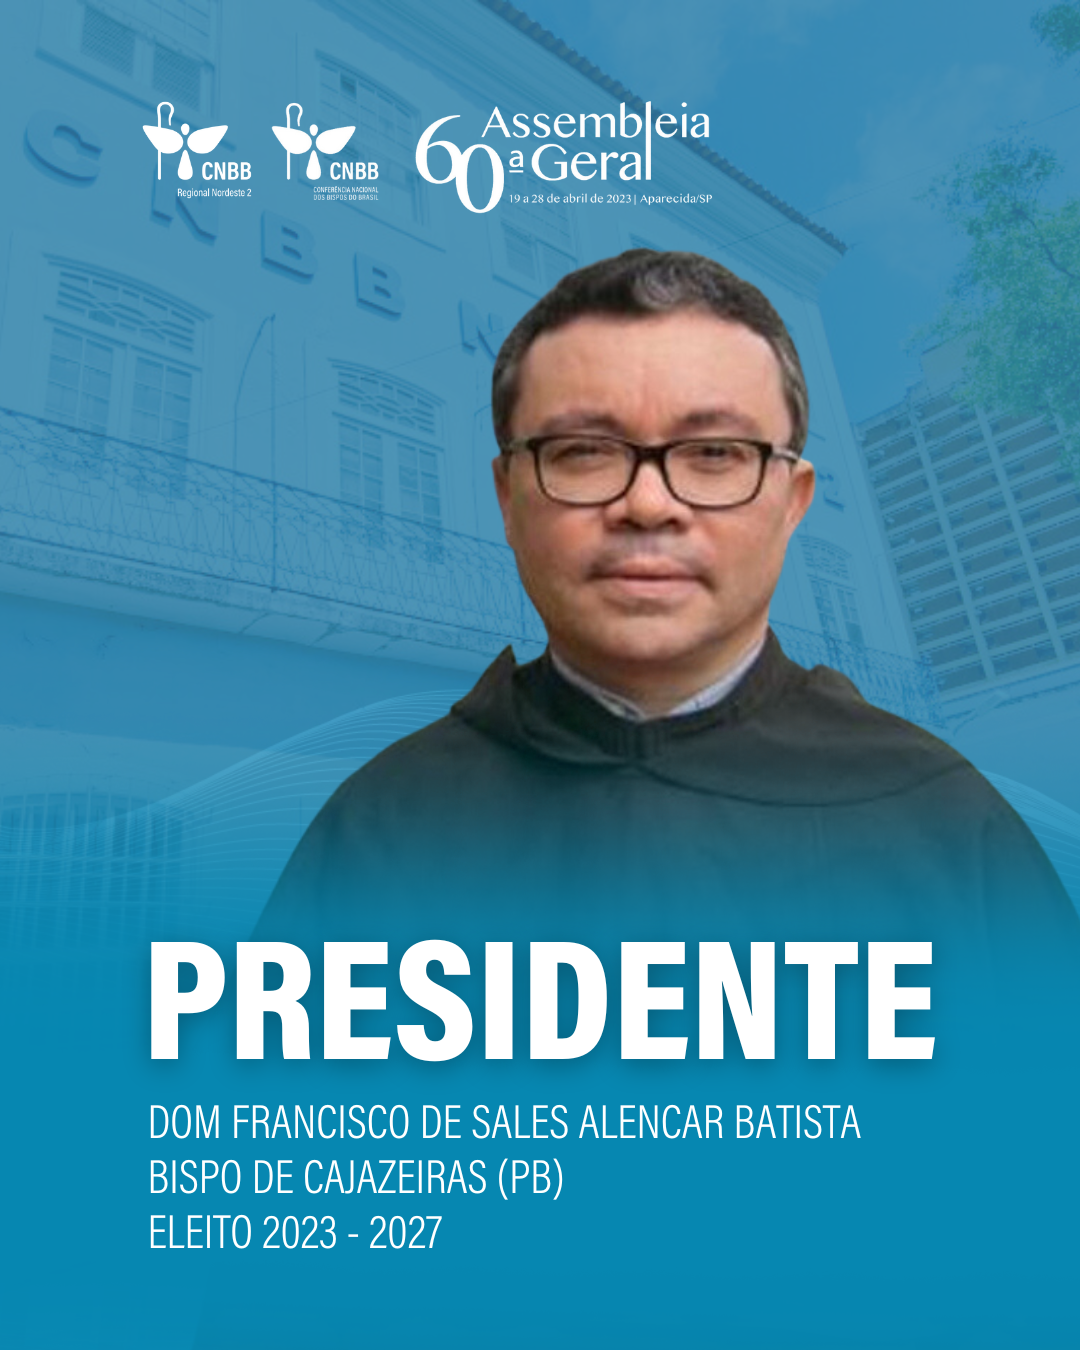 Novo documento Veritatis gaudium: Papa promove reforma de faculdades e  universidades eclesiásticas - CNBB Nordeste 2